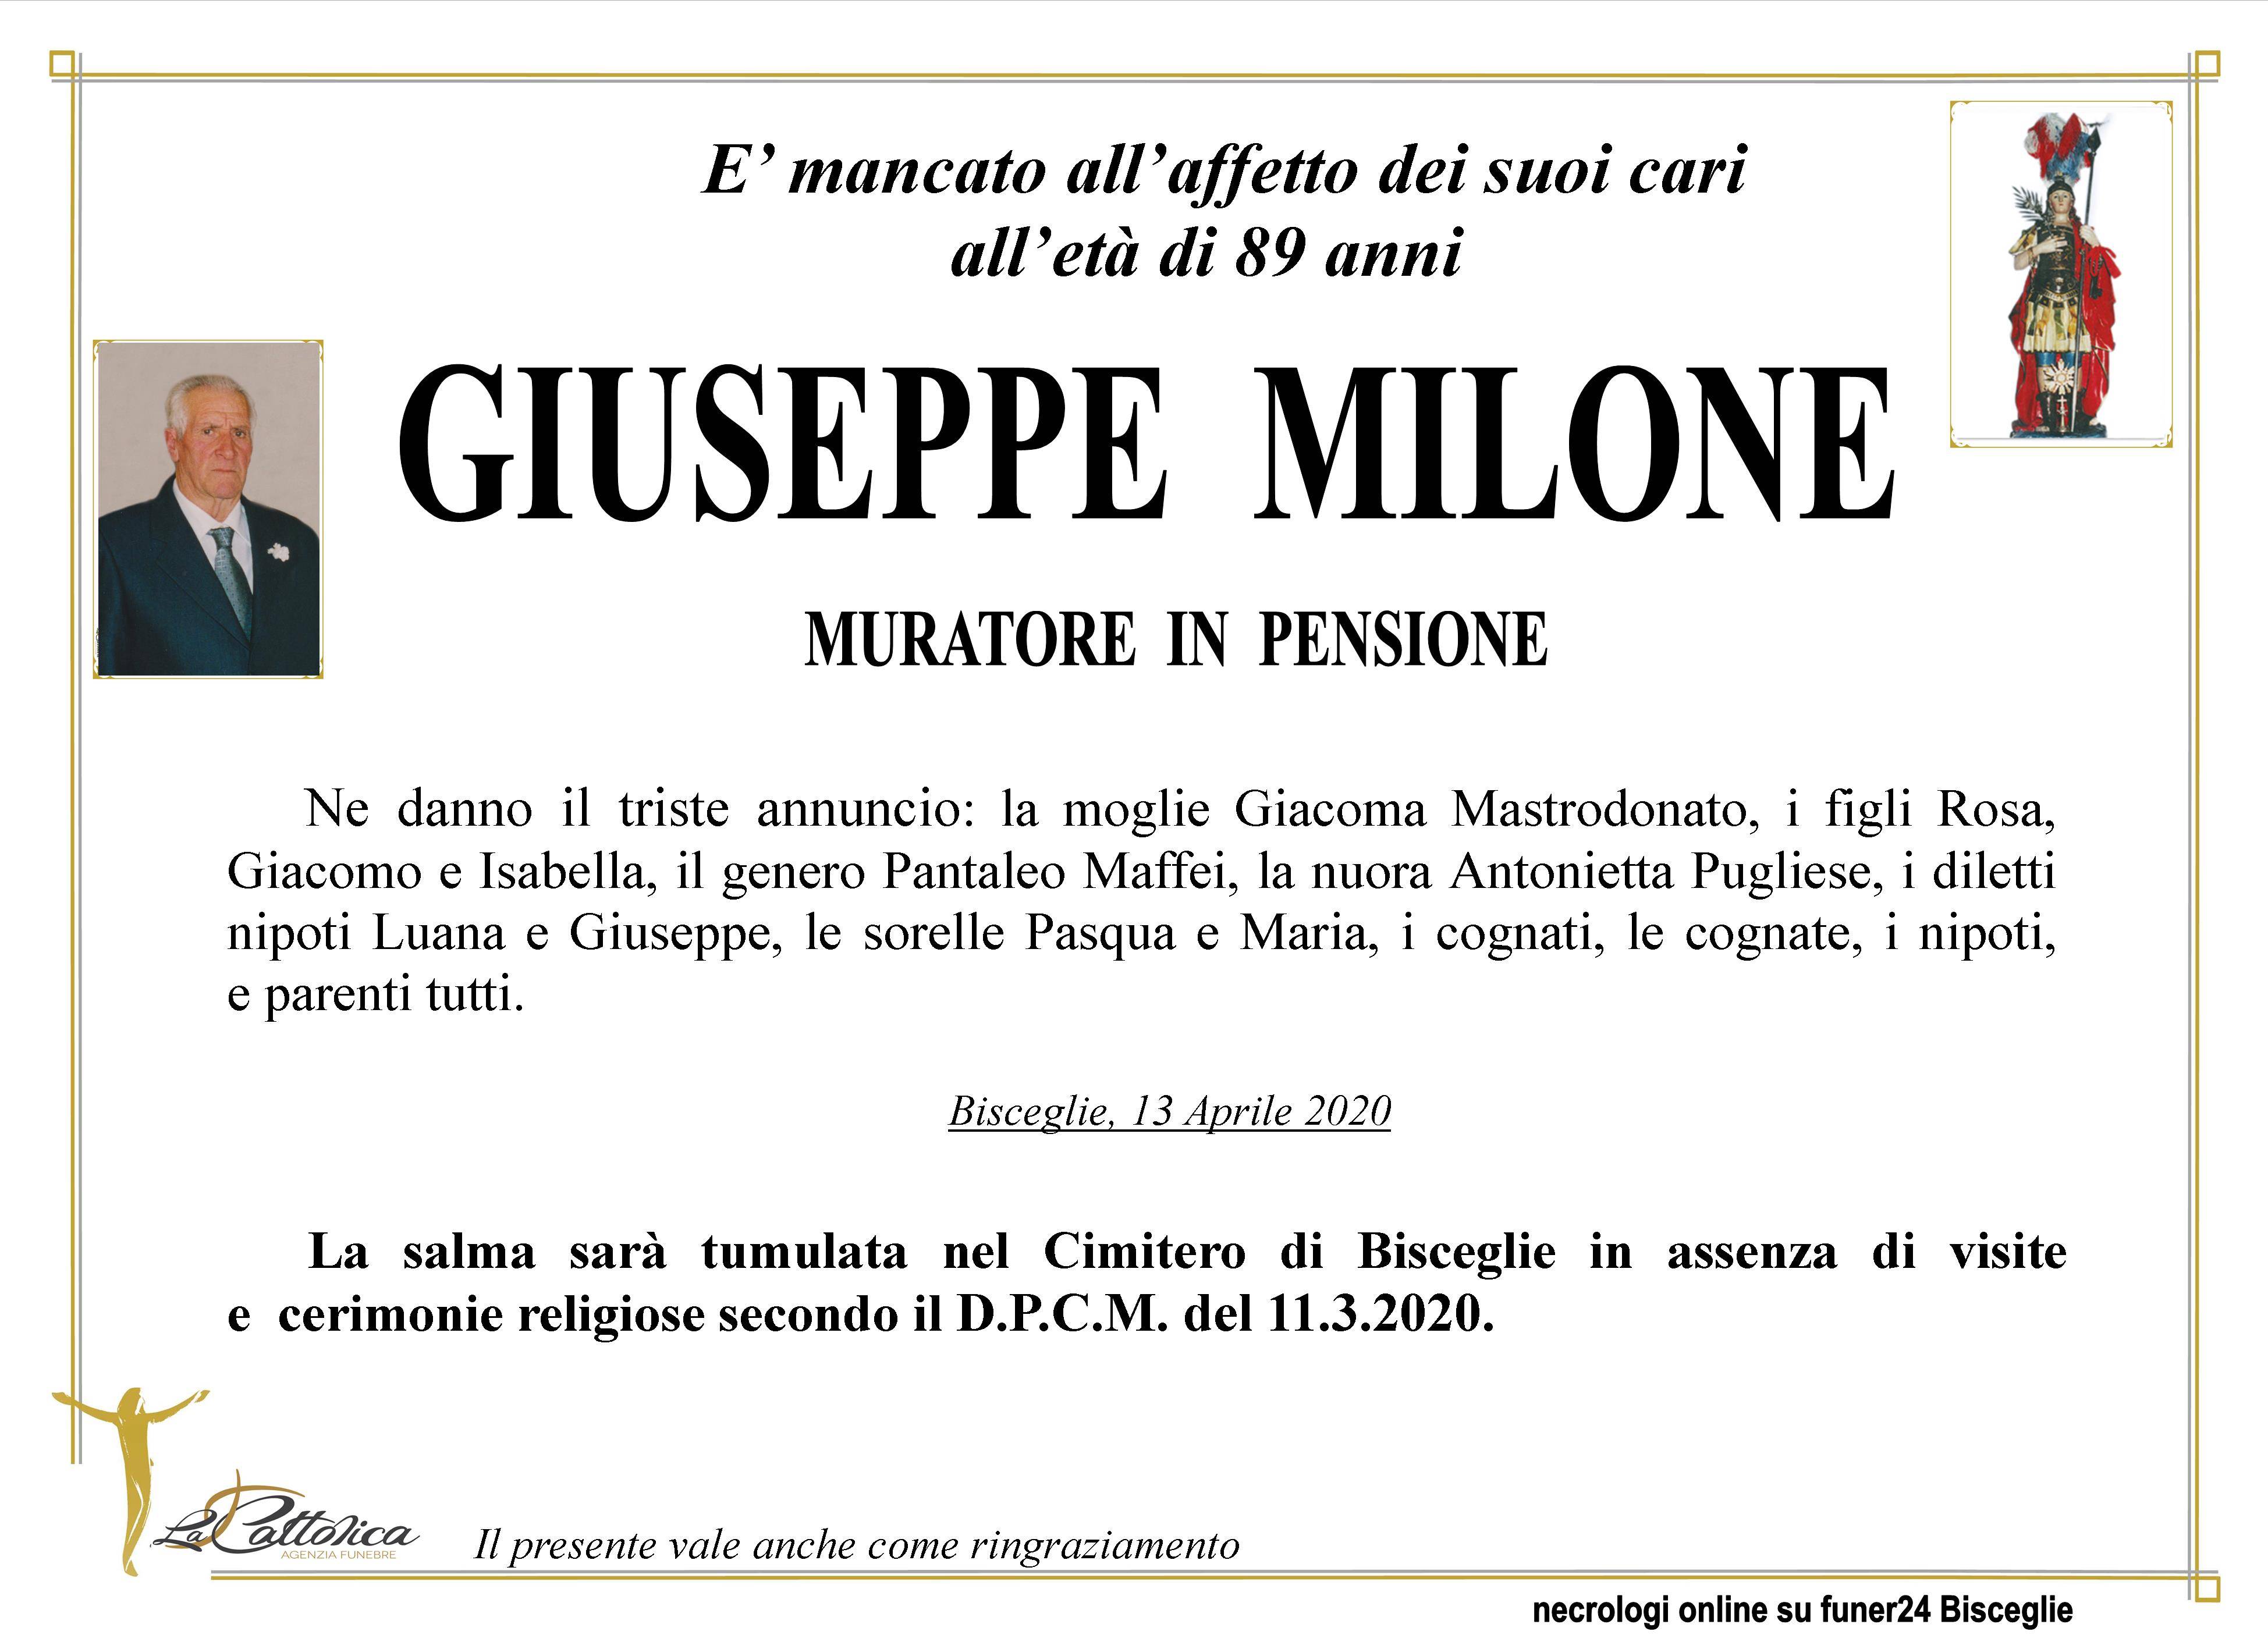 Giuseppe Milone